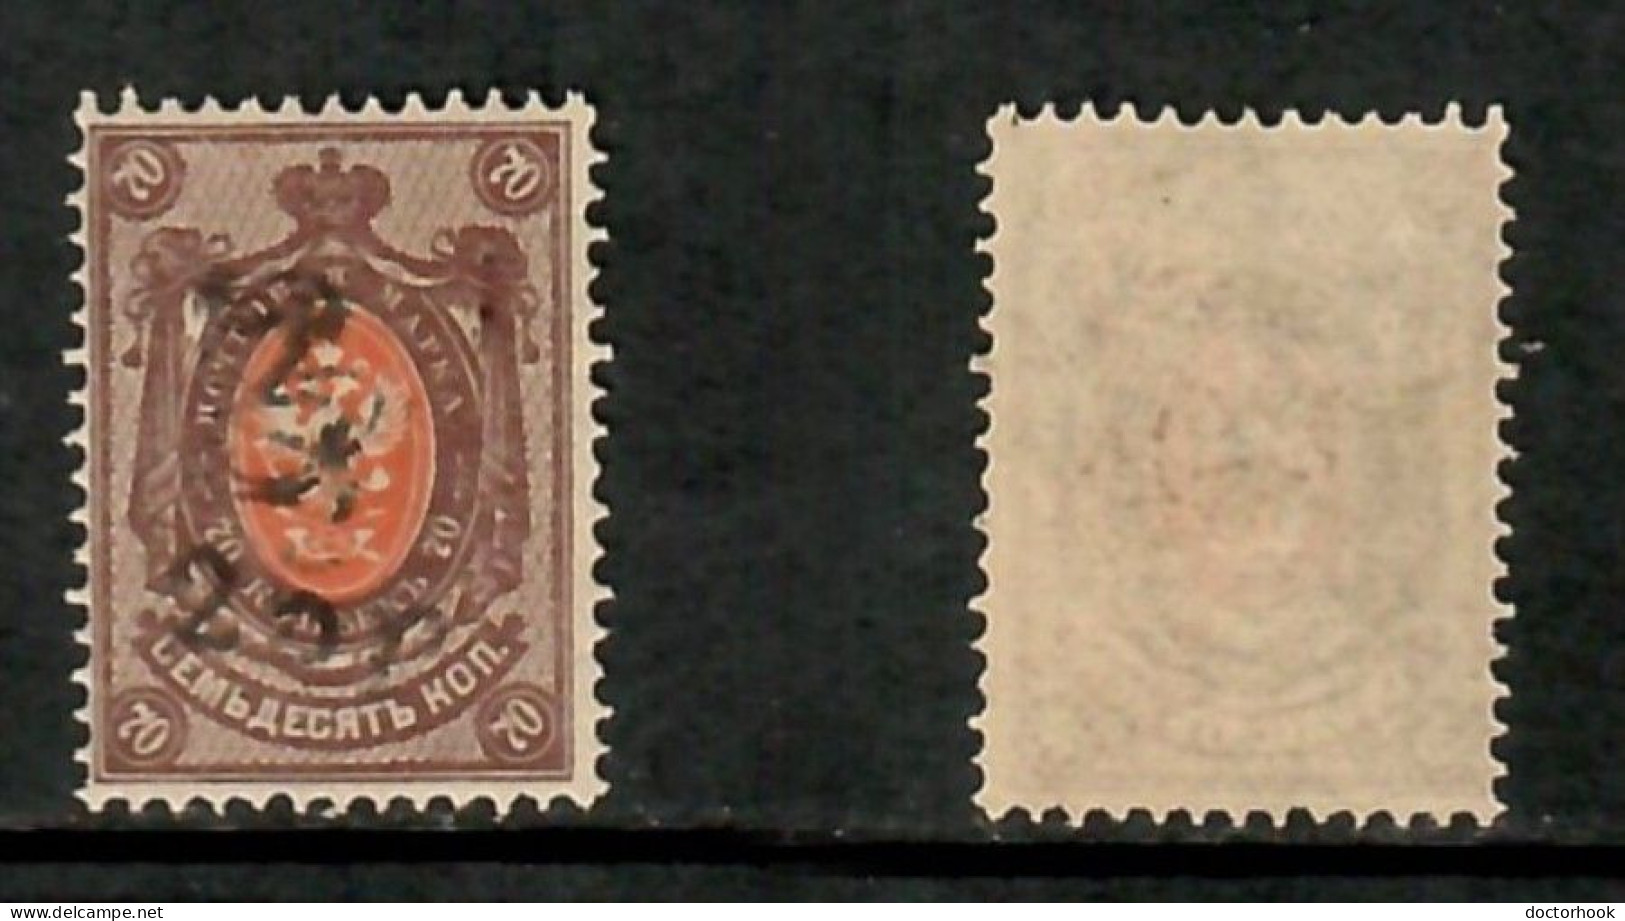 ARMENIA    Scott # 156* MINT LH (CONDITION PER SCAN) (Stamp Scan # 1044-9) - Armenia